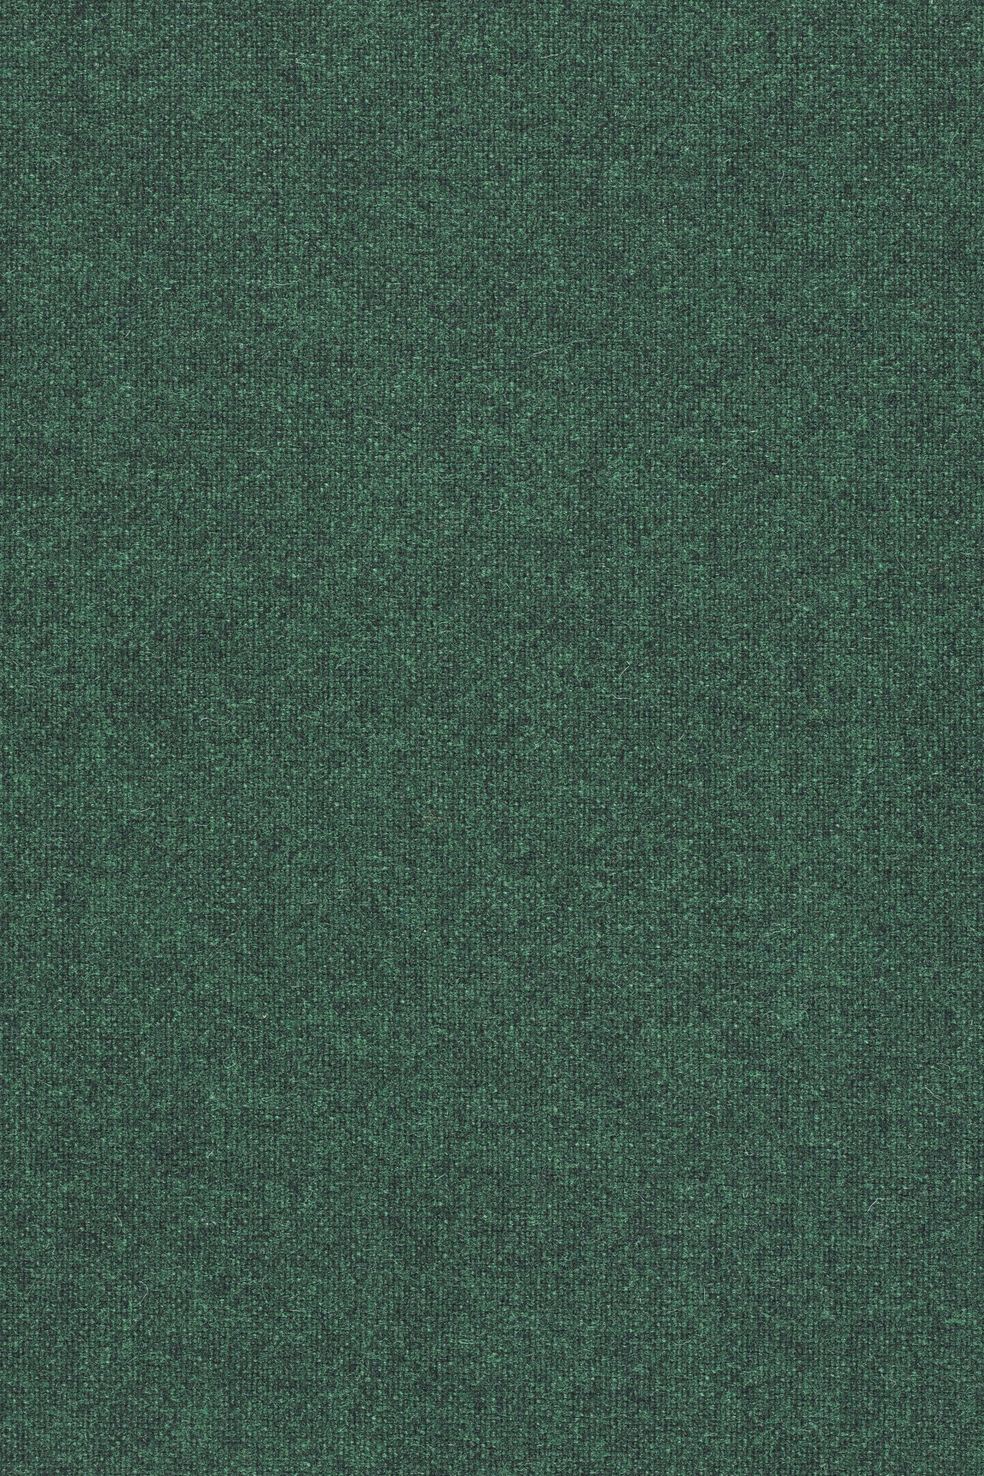 Fabric sample Tonica 2 962 green